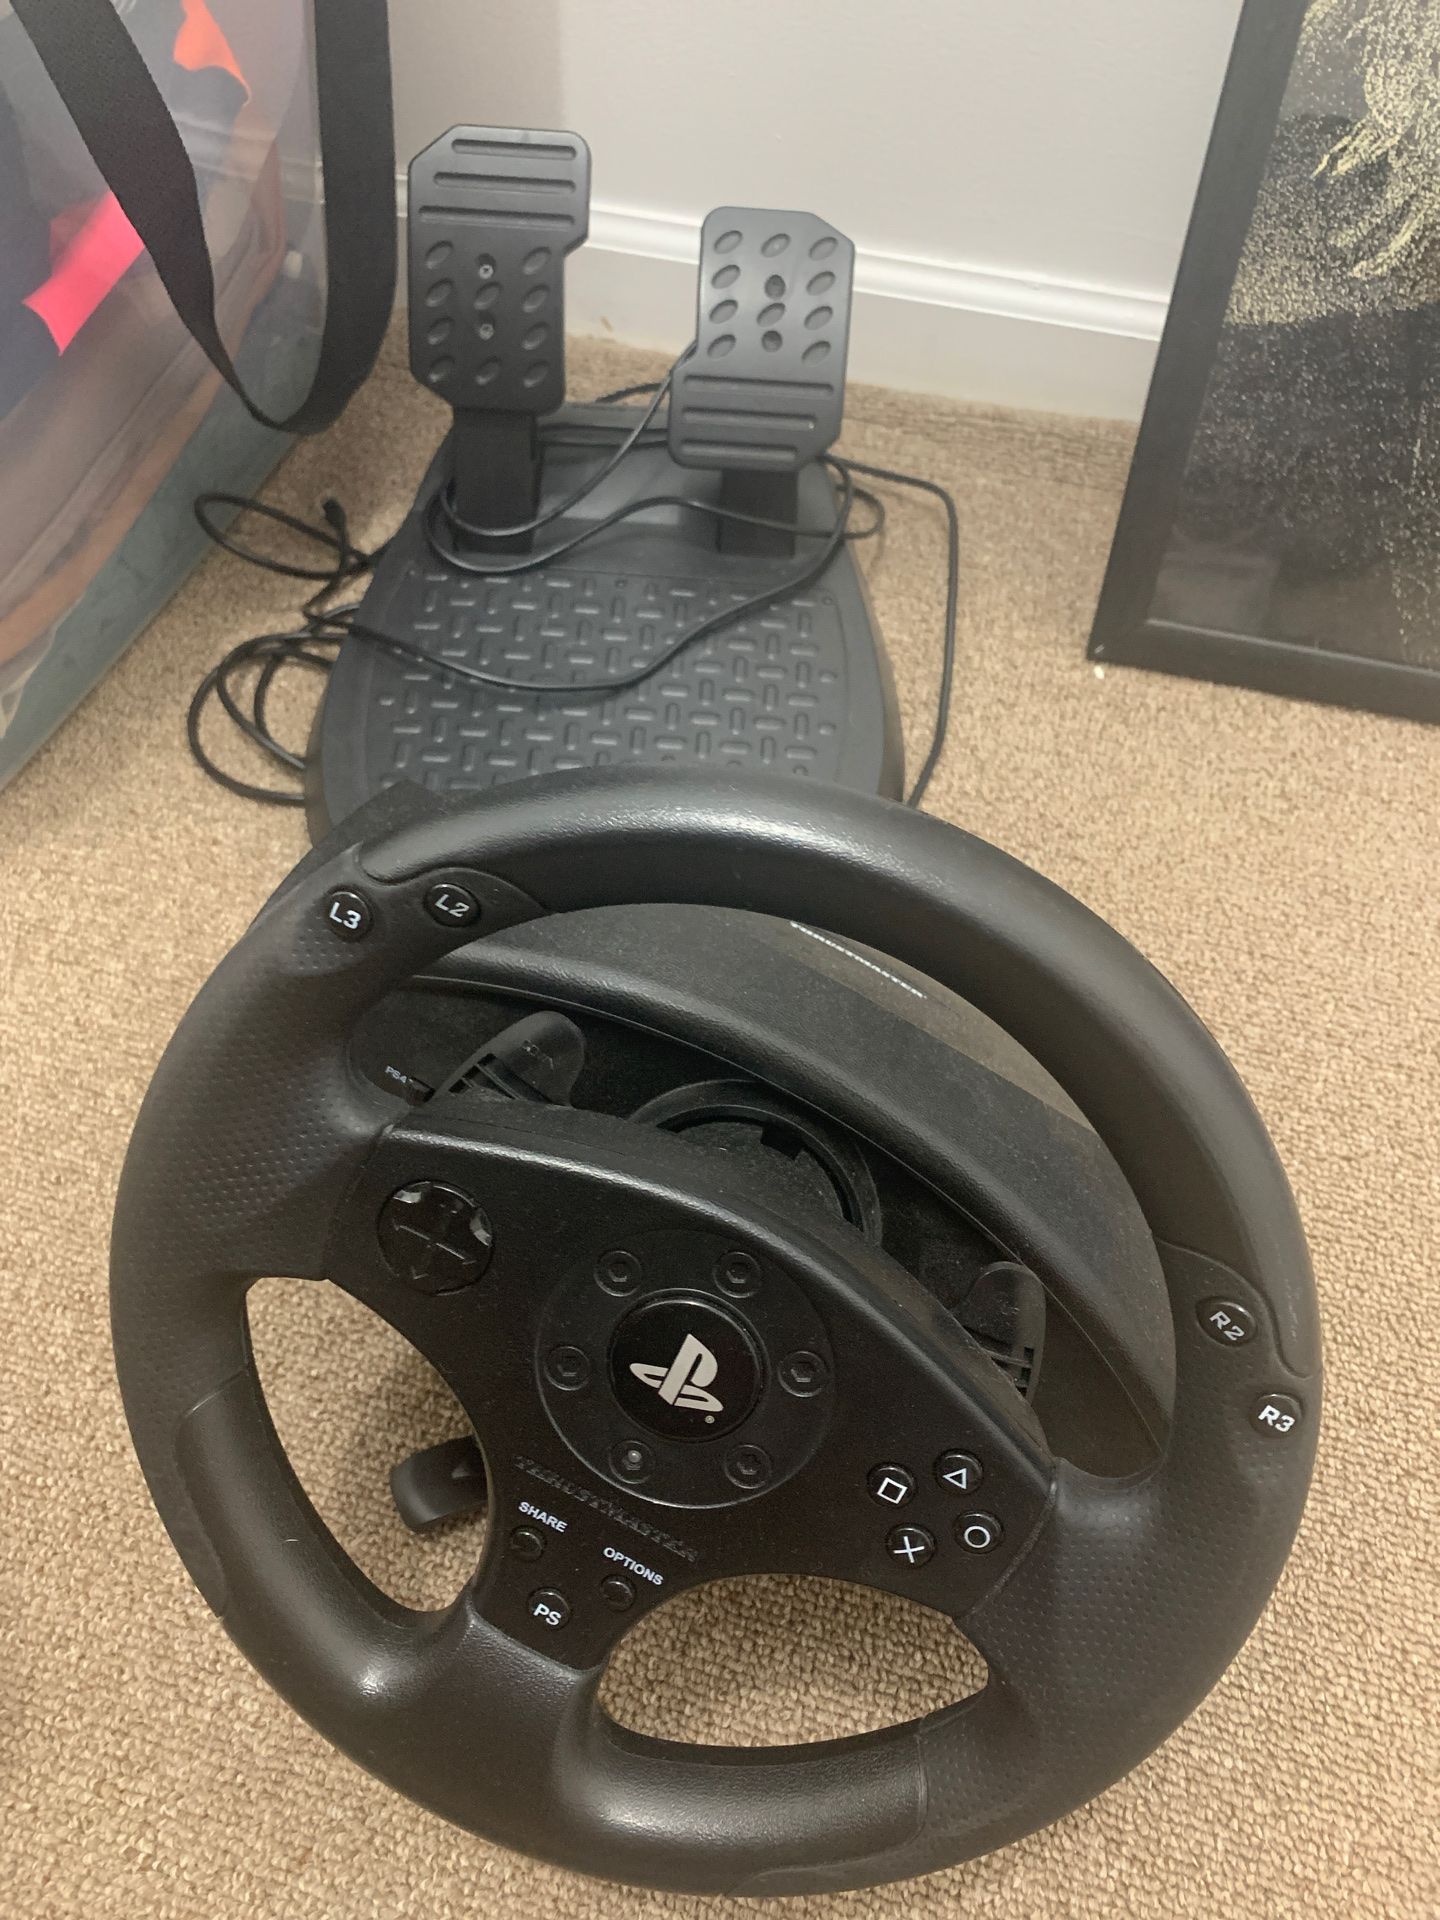 Play station racing wheel